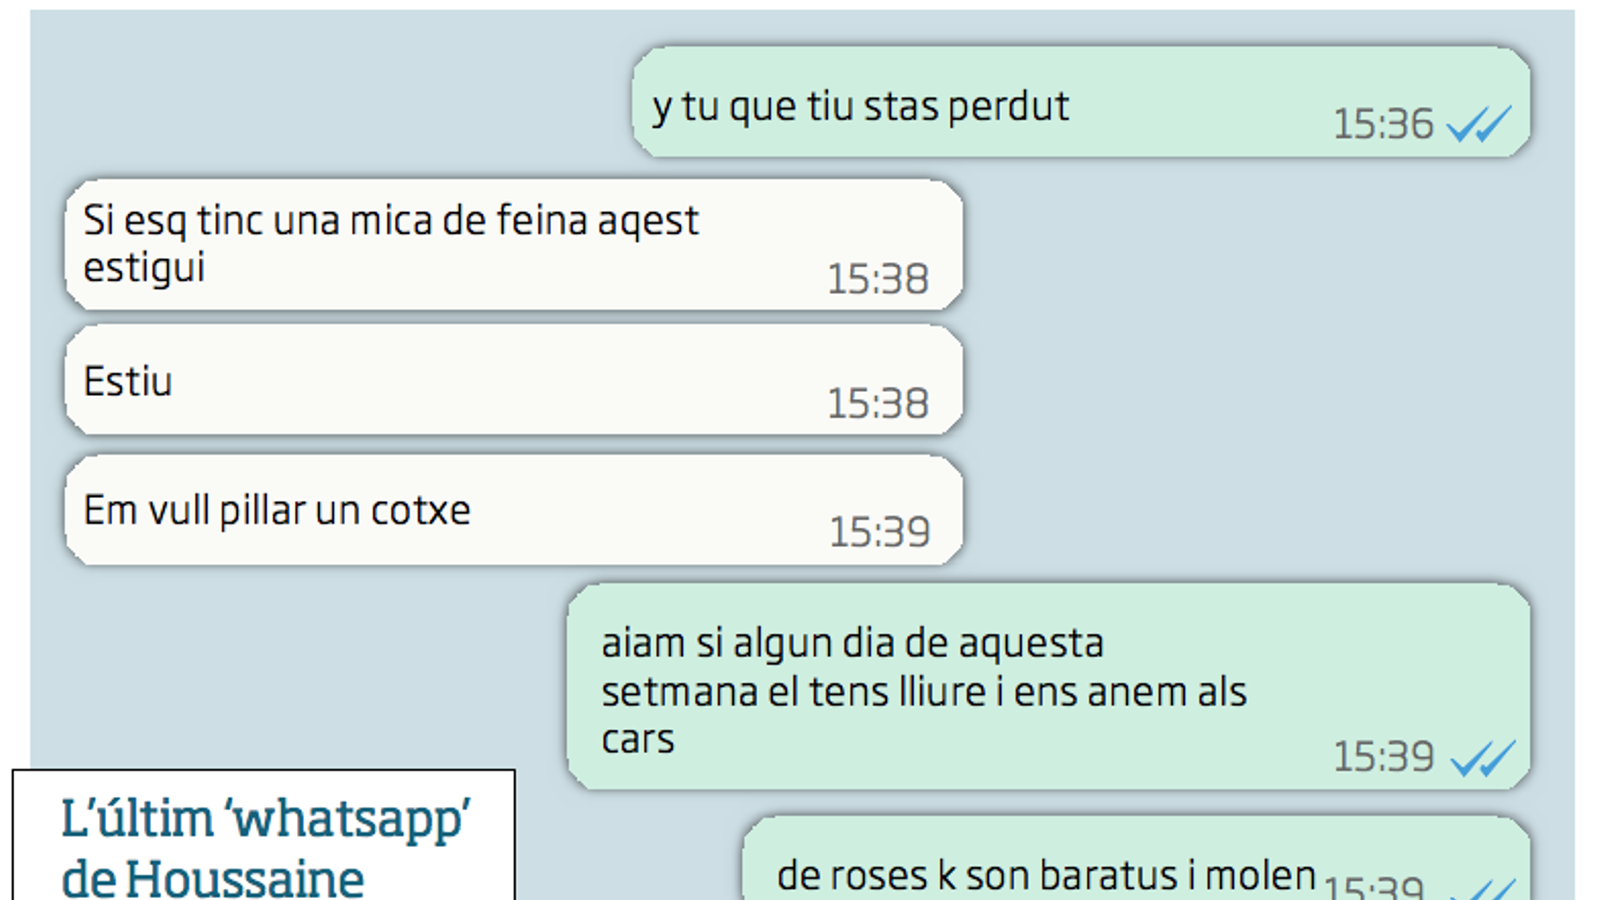 Intercanvi de Whatsapps entre Houssaine Abouyaaqoub i un amic